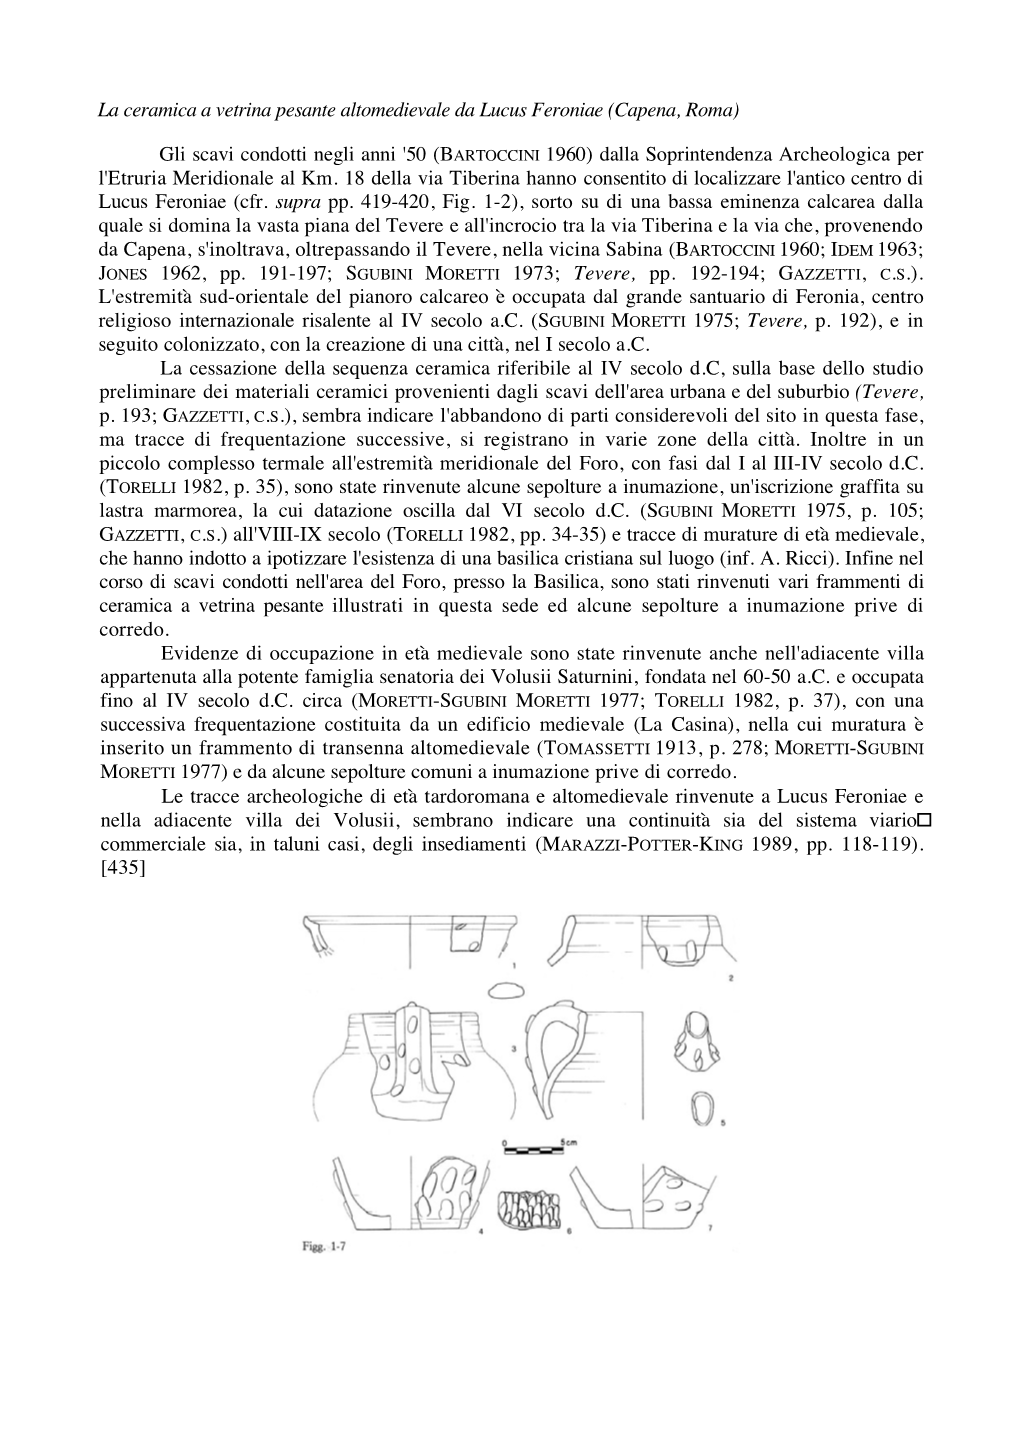 La Ceramica a Vetrina Pesante Altomedievale Da Lucus Feroniae (Capena, Roma)